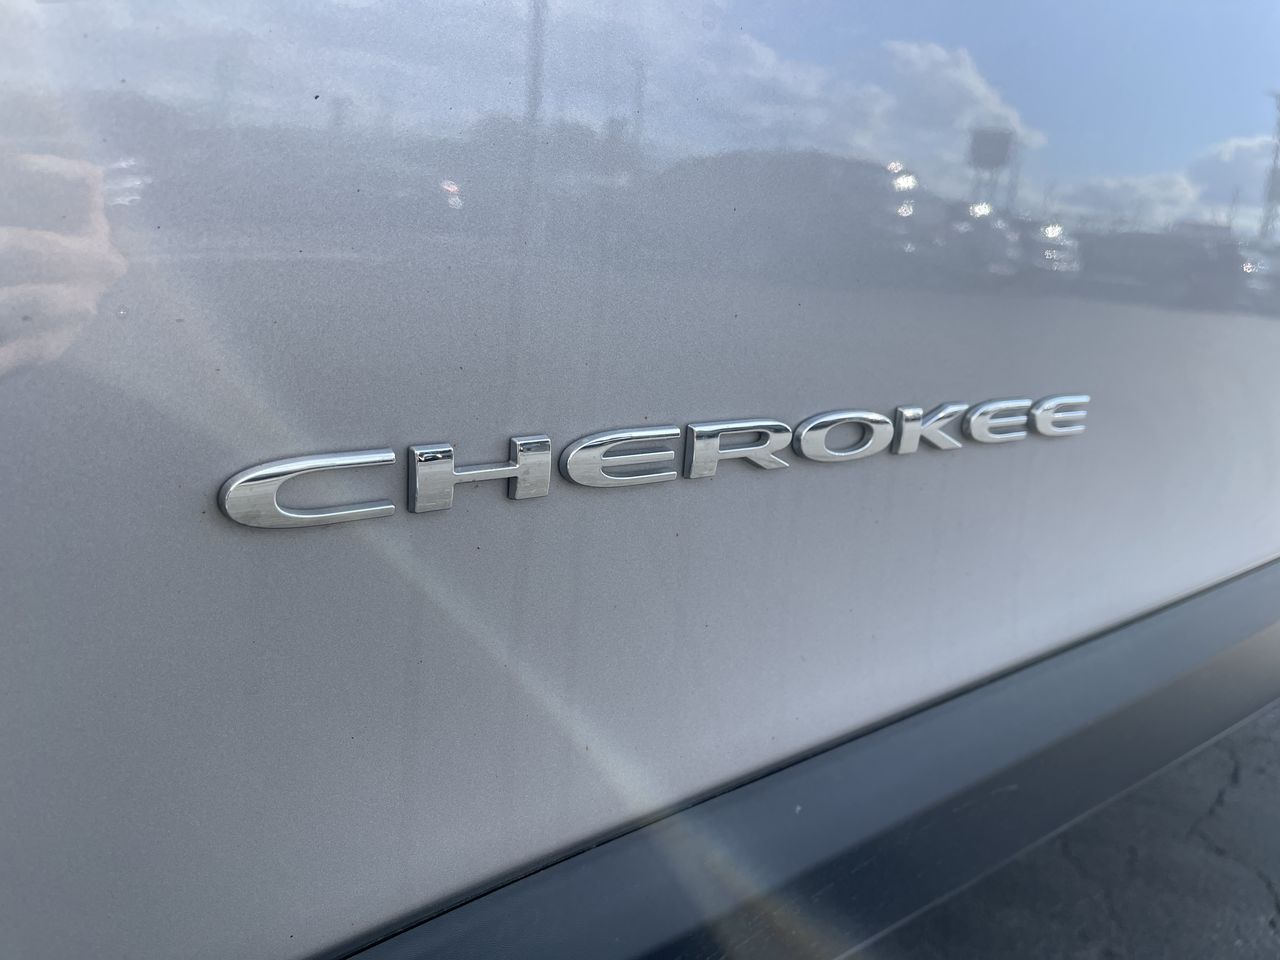 2019 Jeep Cherokee Limited 26